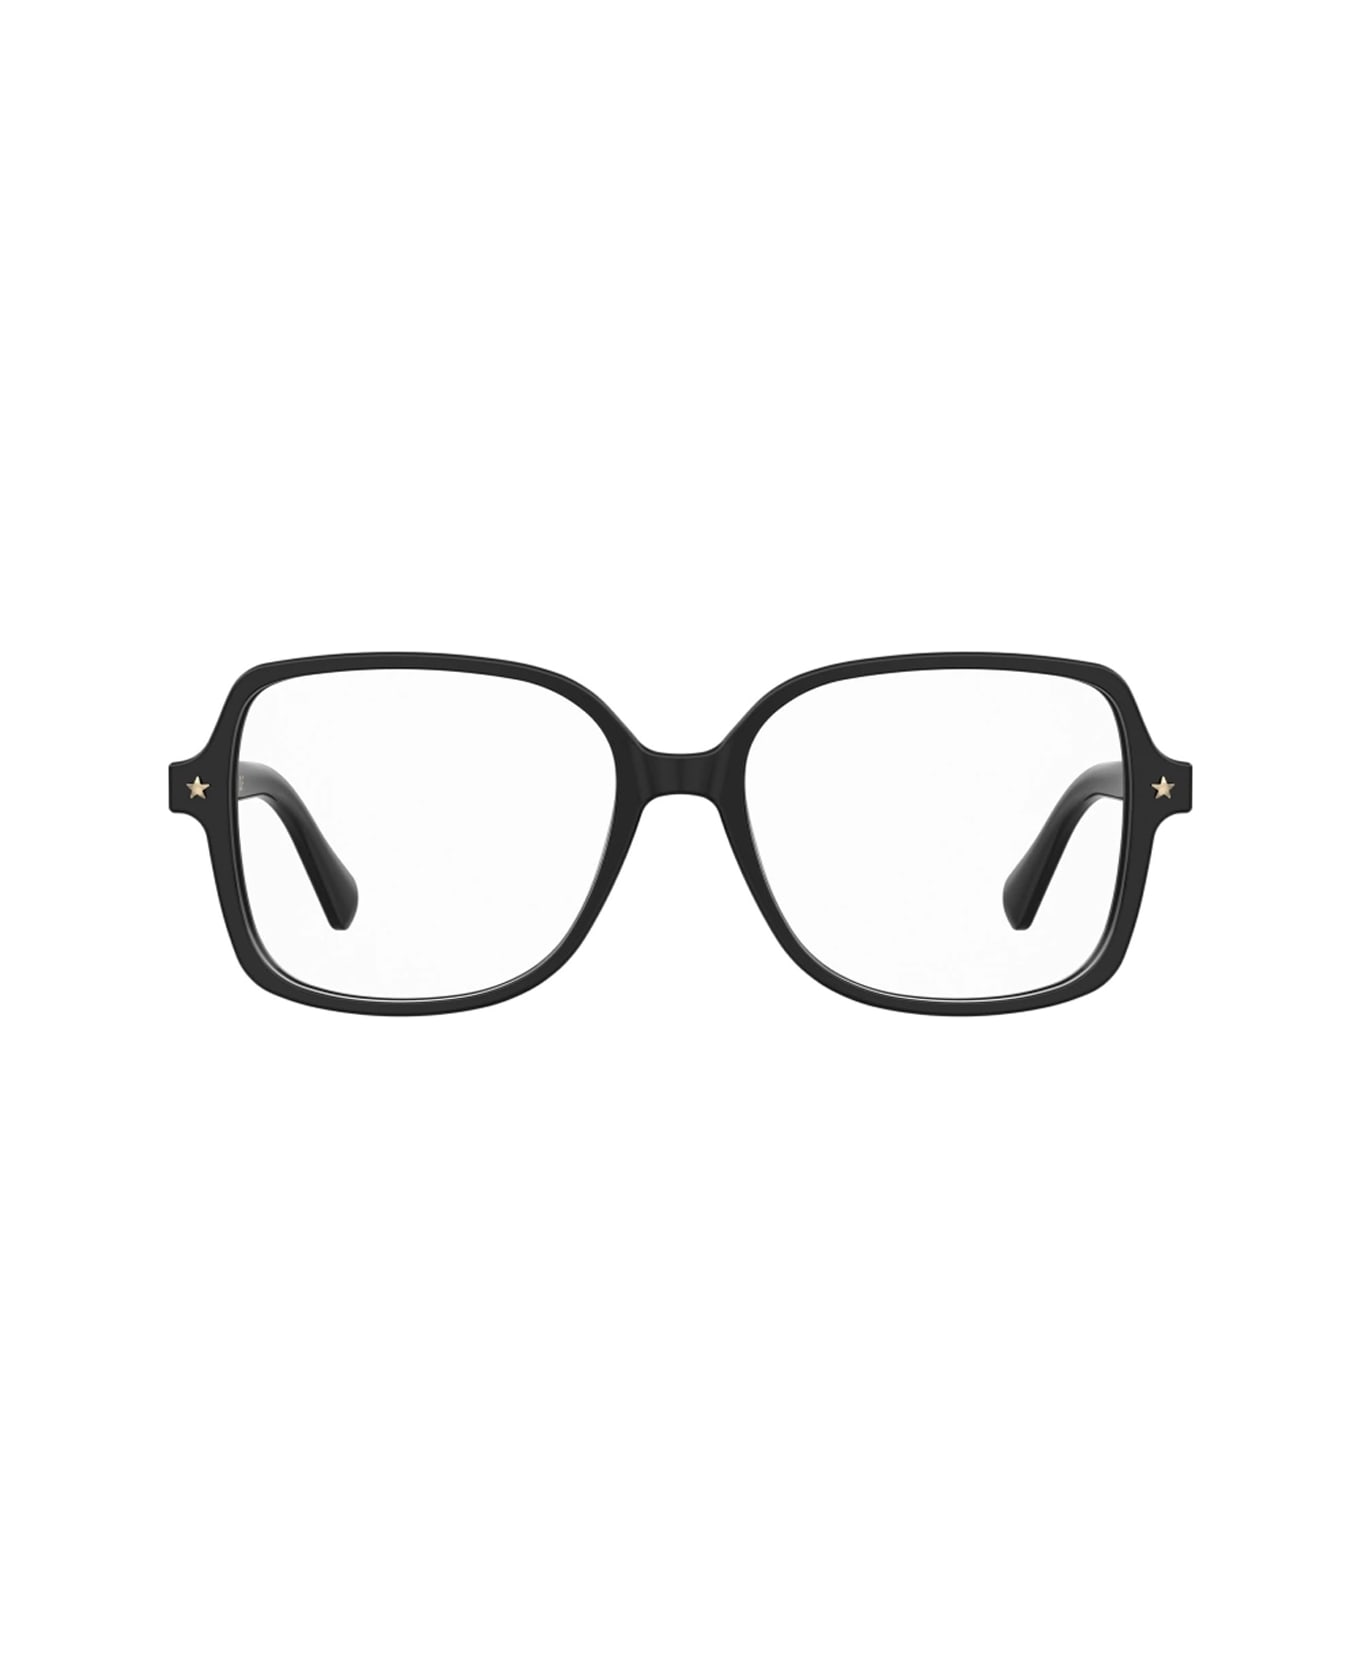 Chiara Ferragni Cf 1026 807/16 Black Glasses - Nero